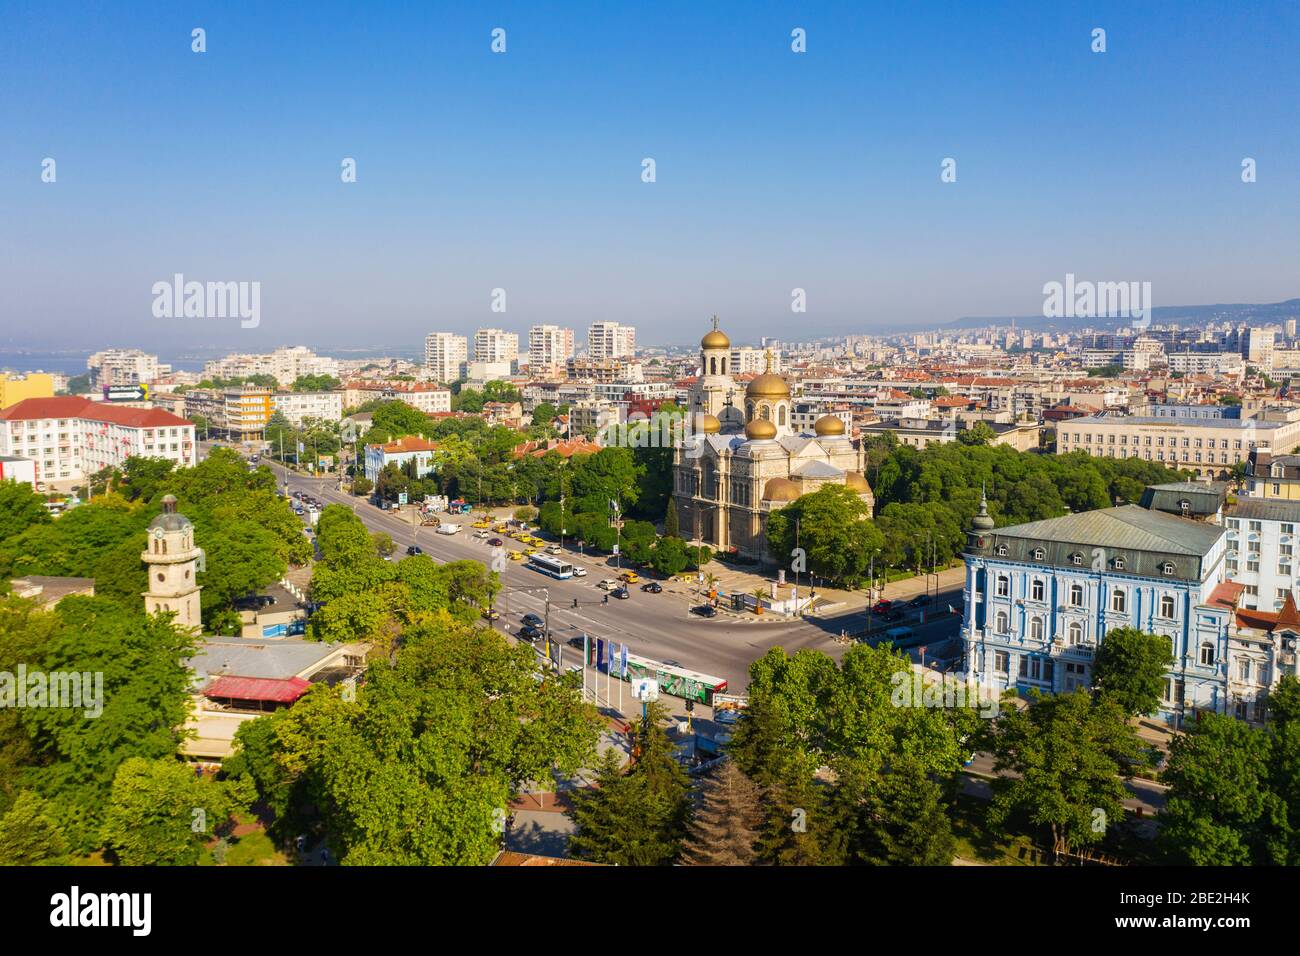 Europa, Bulgaria, Varna, vista aérea de la Catedral de la Madre de Dios Foto de stock